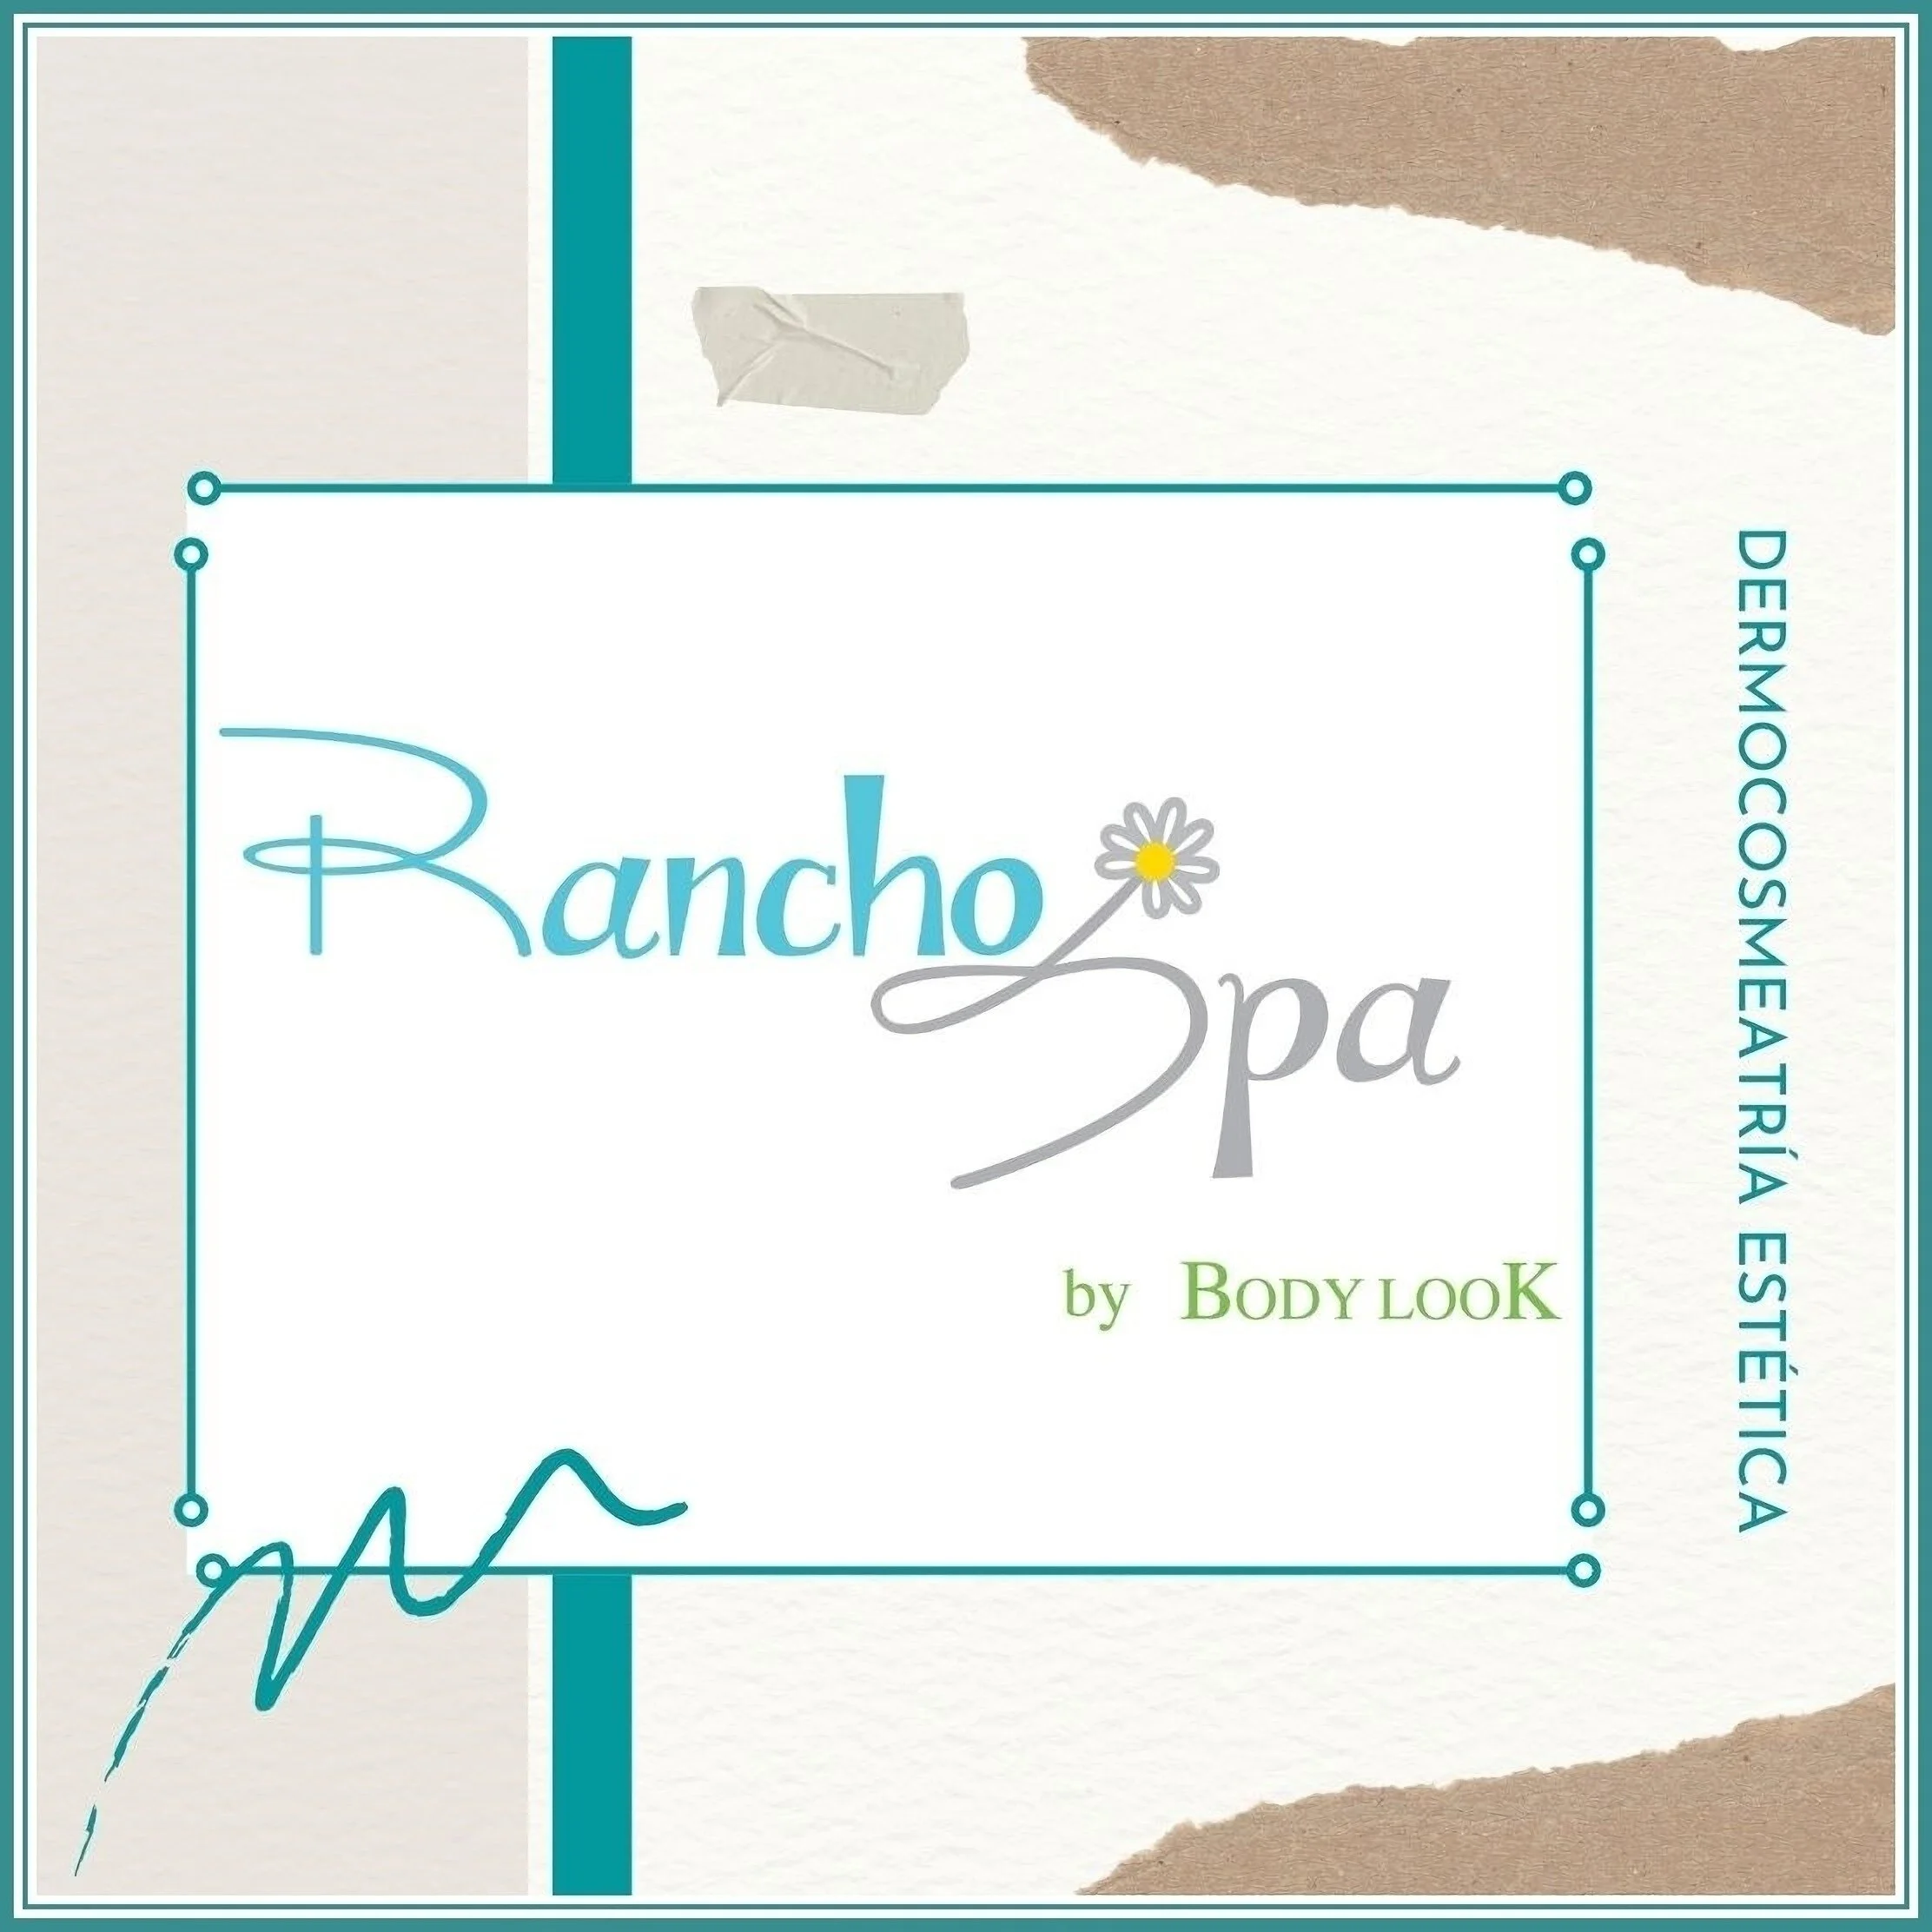 Spa-rancho-spa-by-body-look-14568